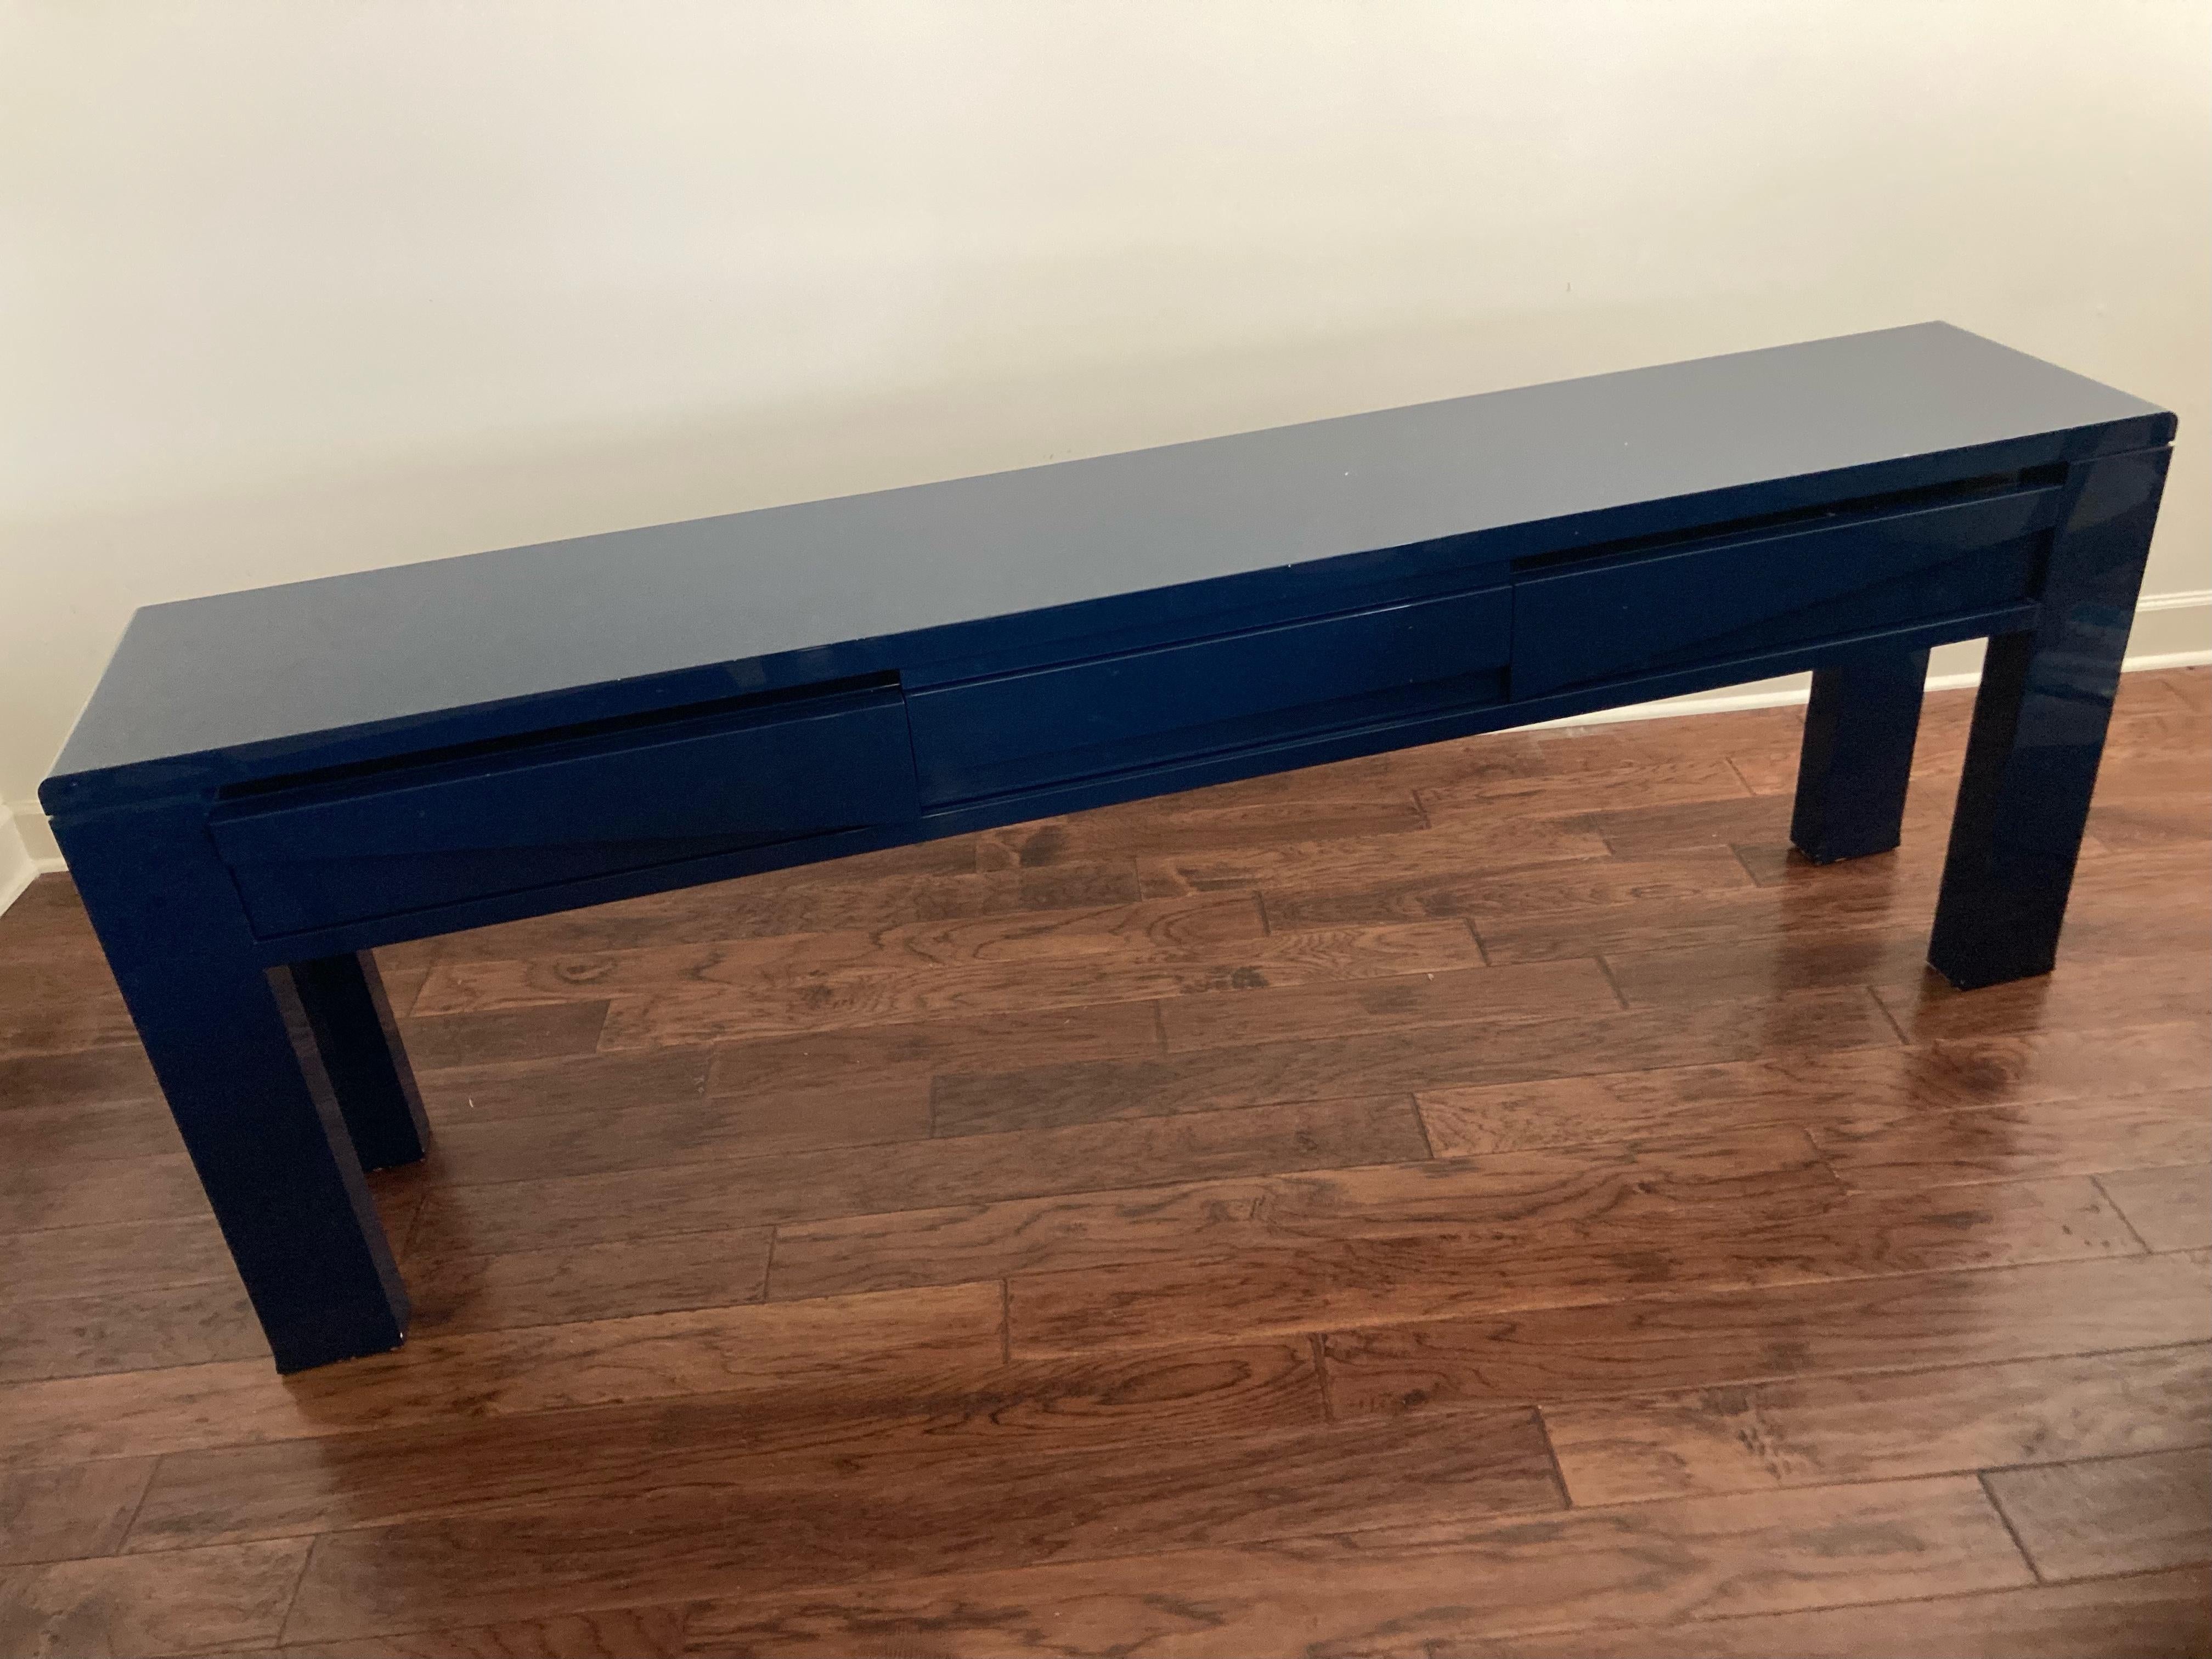 Belgian Sleek Emiel Veranneman Shiny Blue Lacquer Mid-Century Modern Console Table For Sale